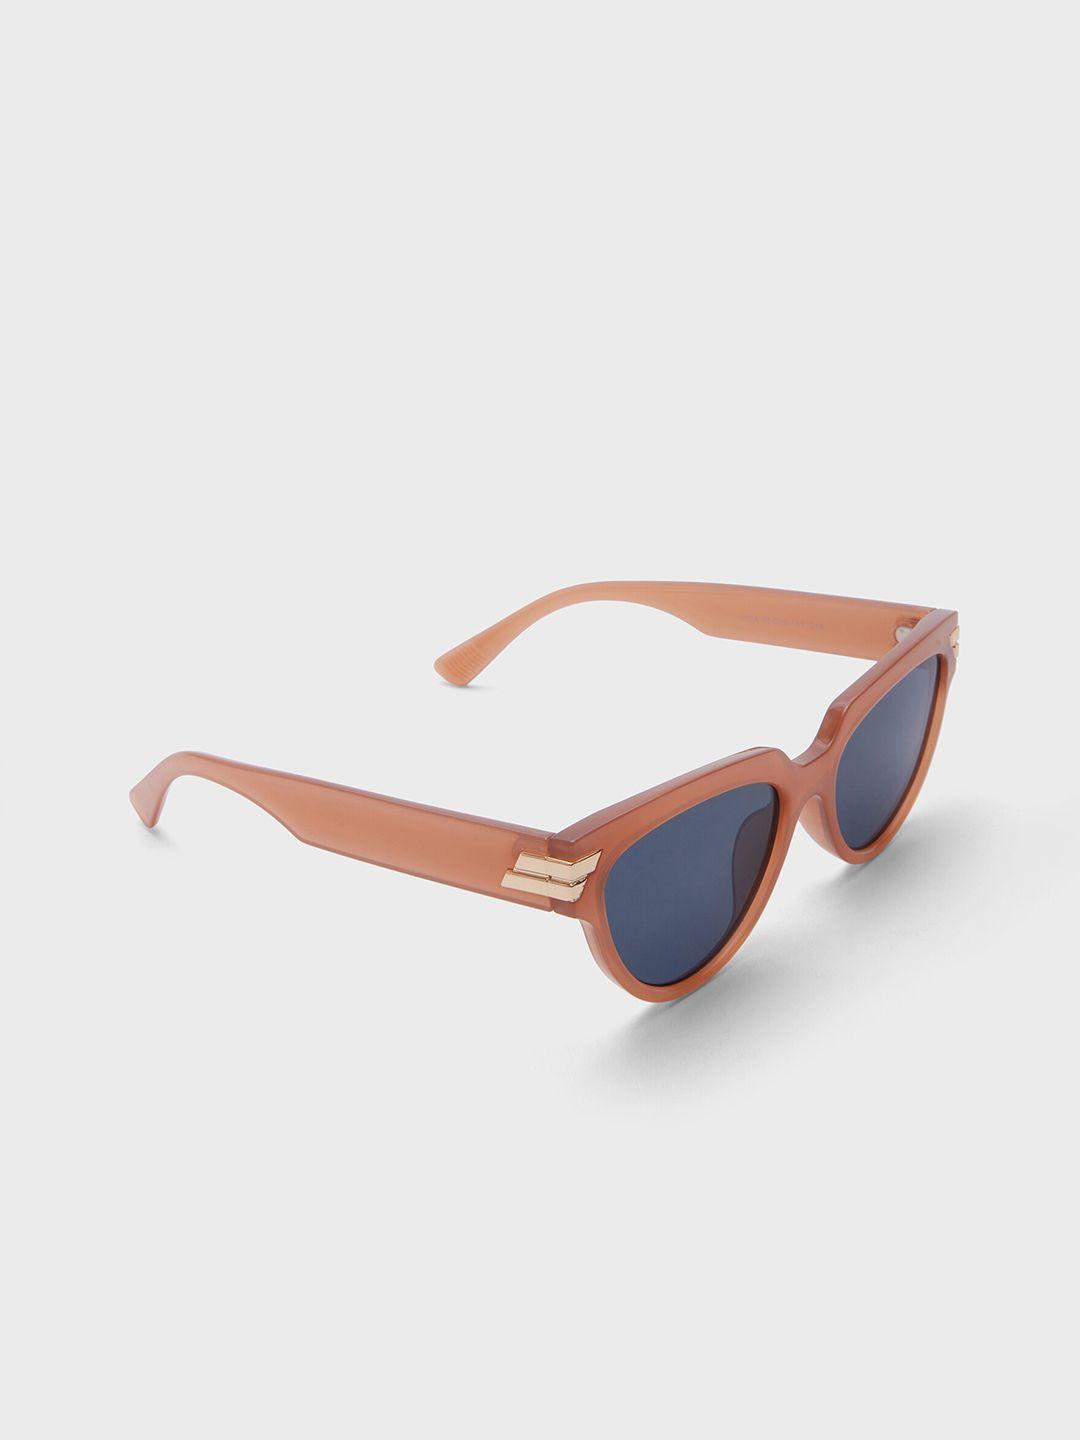 20dresses women oval acrylic sunglasses with regular lens sg010753